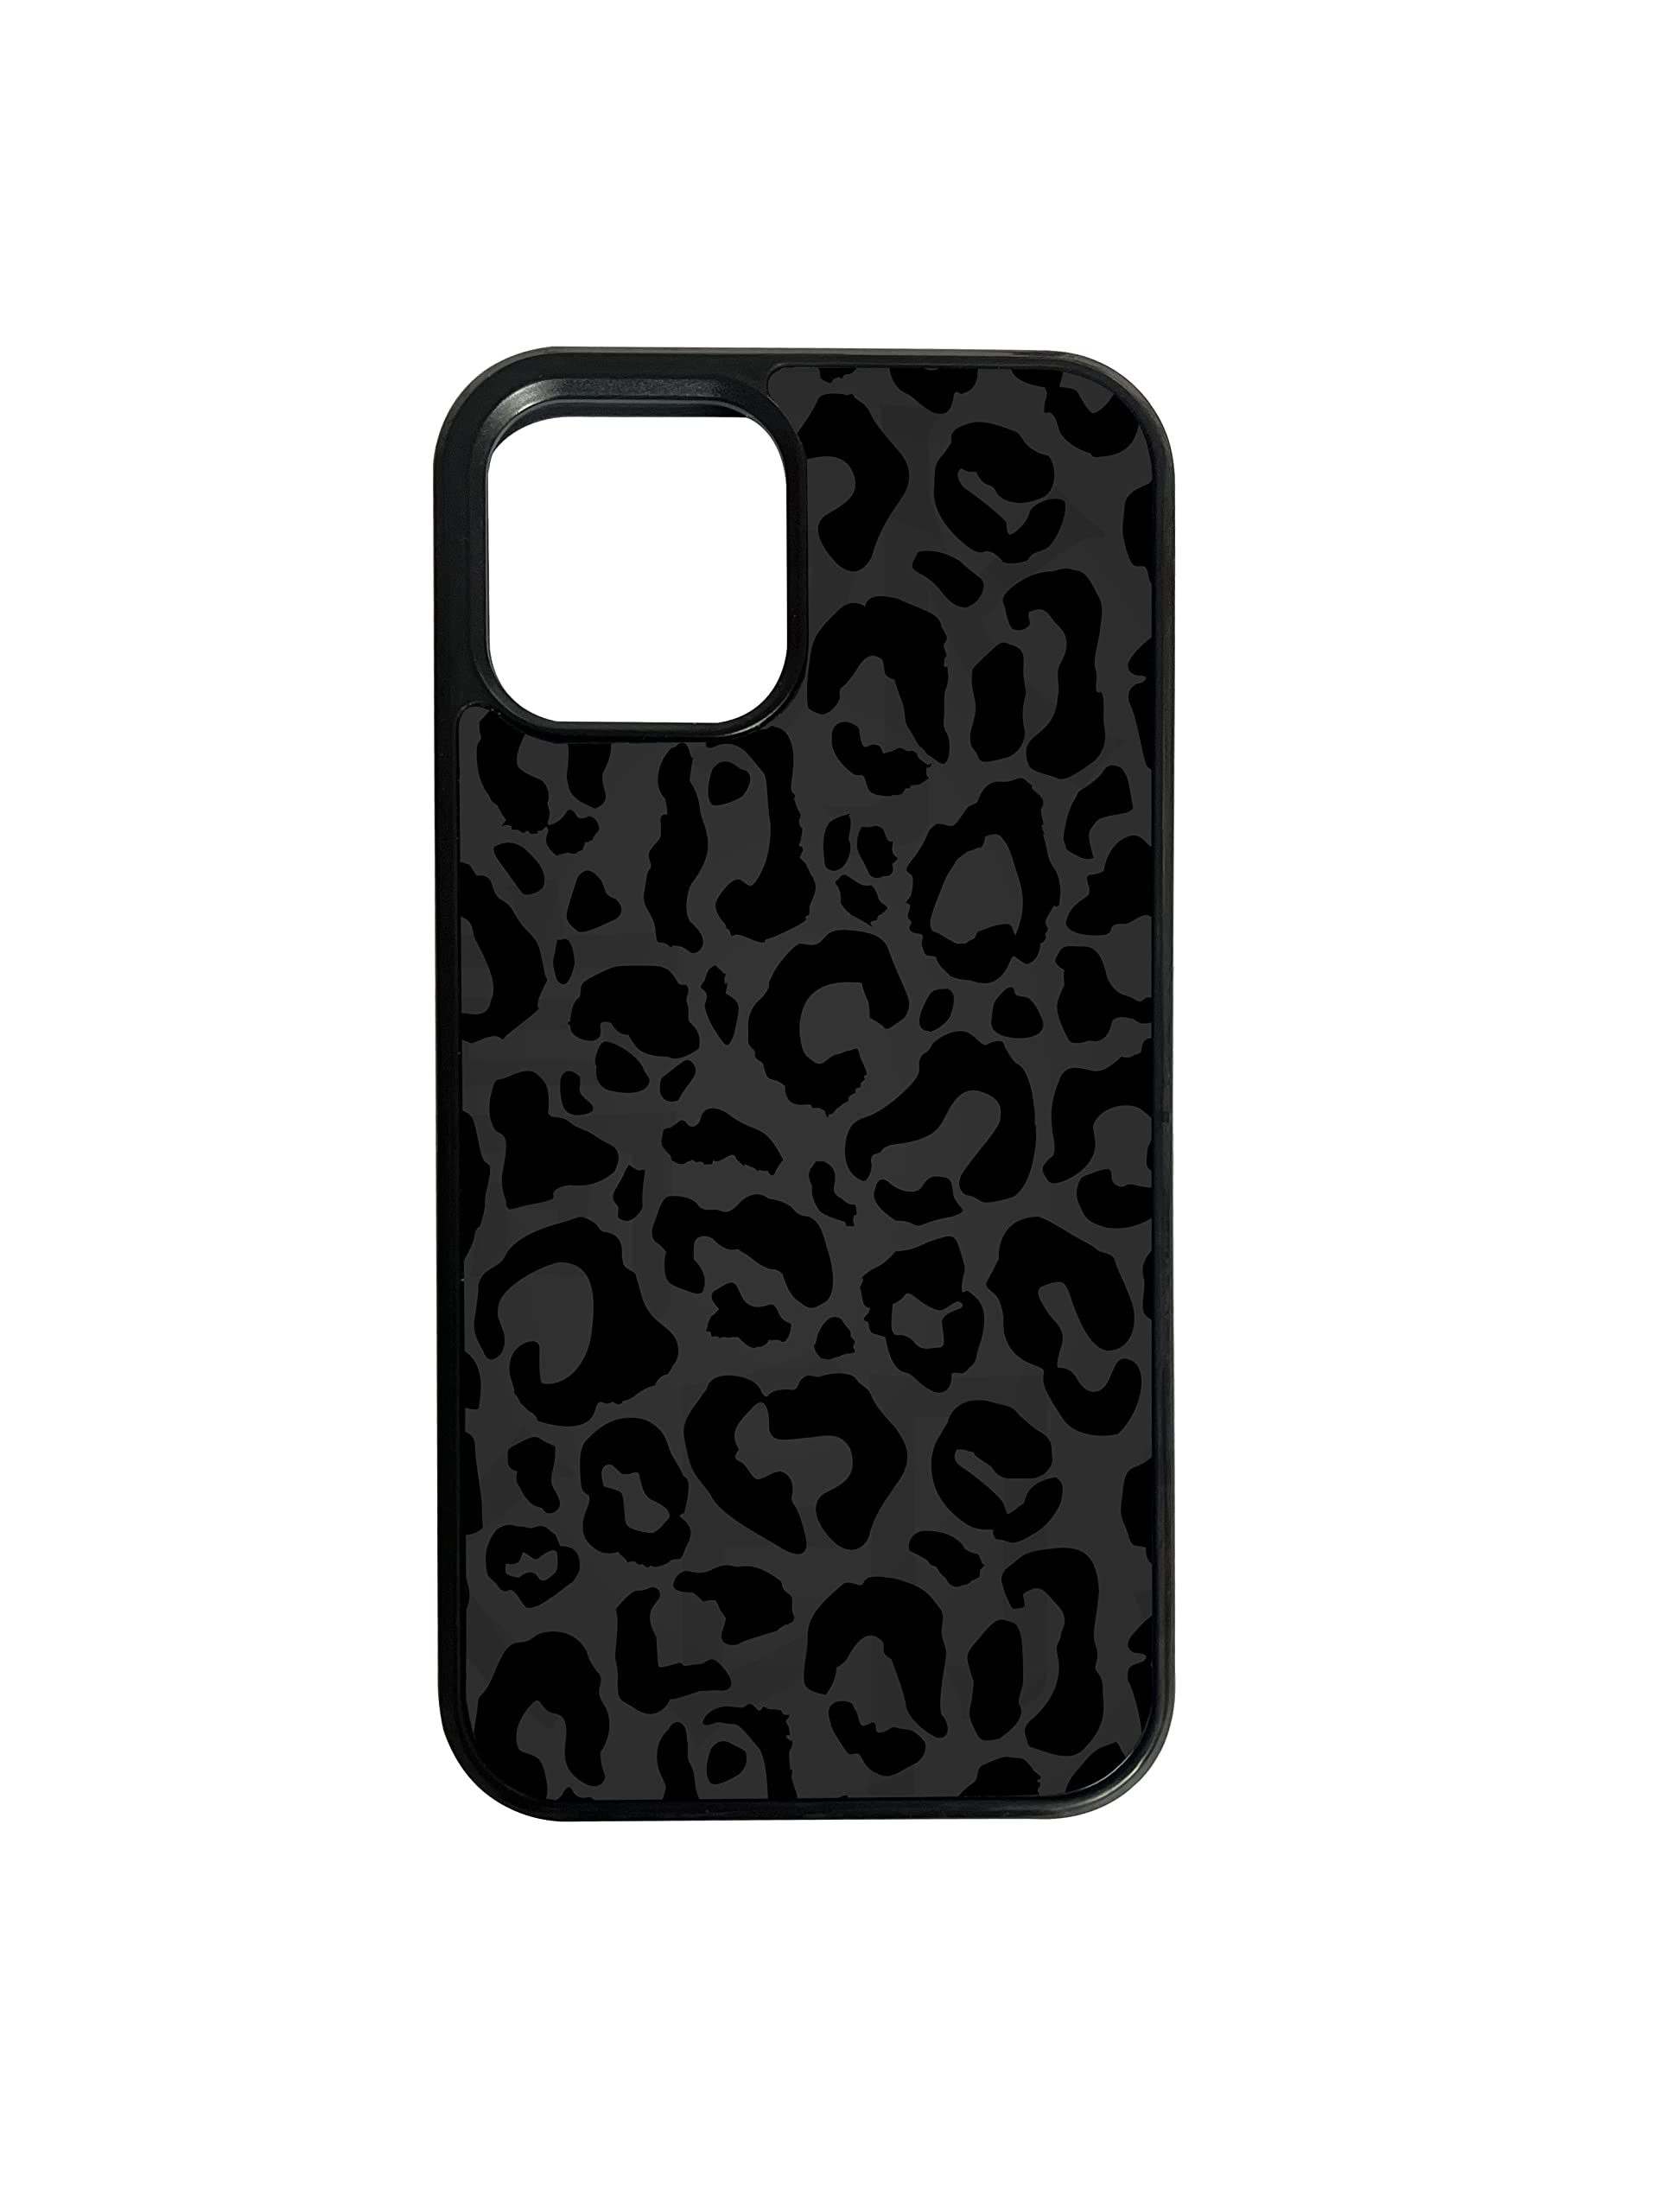 XUNQIAN compatible for iPhone XR case, Black Leopard cheetah Animal Skin Print Art Thin Soft Black TPU Tempered Mirror Protectiv